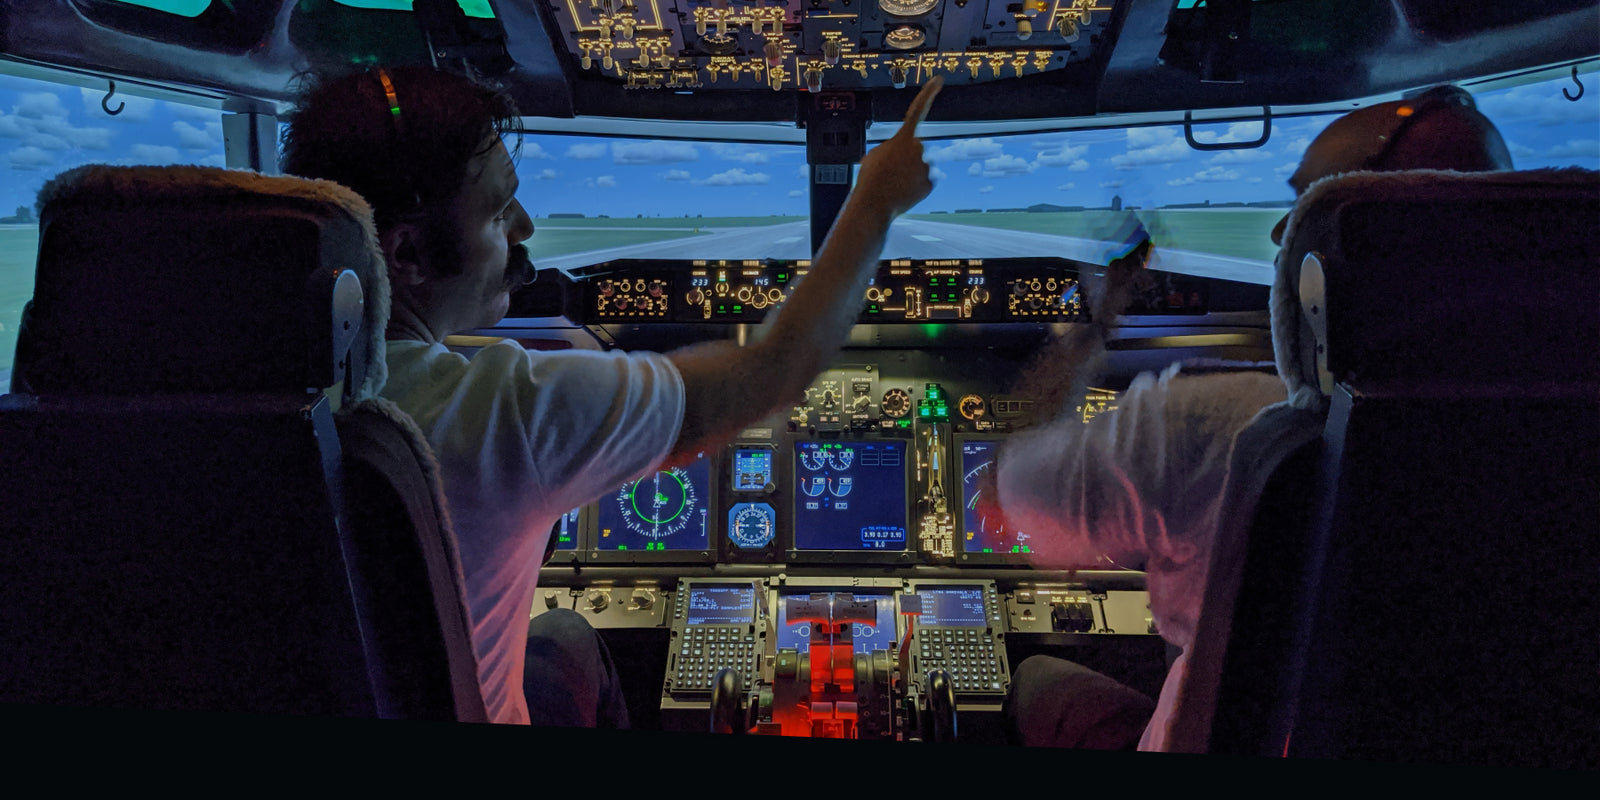 Flight Simulator Experiences